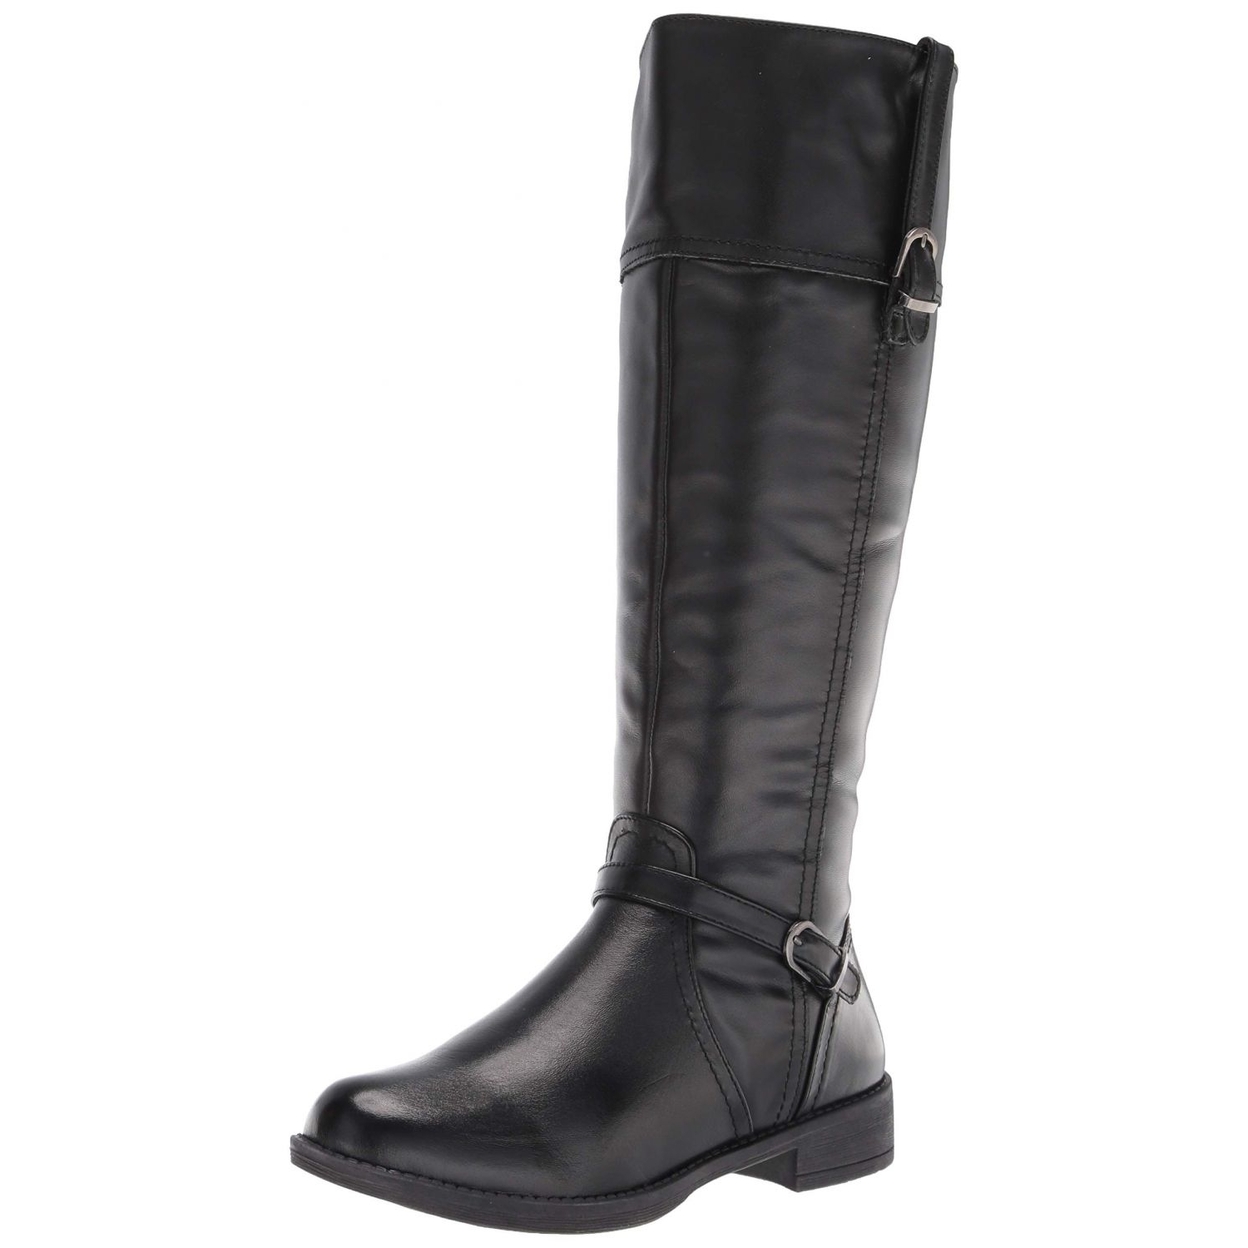 Propet Womens Tasha Zippered Casual Boots Knee High Low Heel 1-2 - Black BROWN - BROWN, 11 WIDE